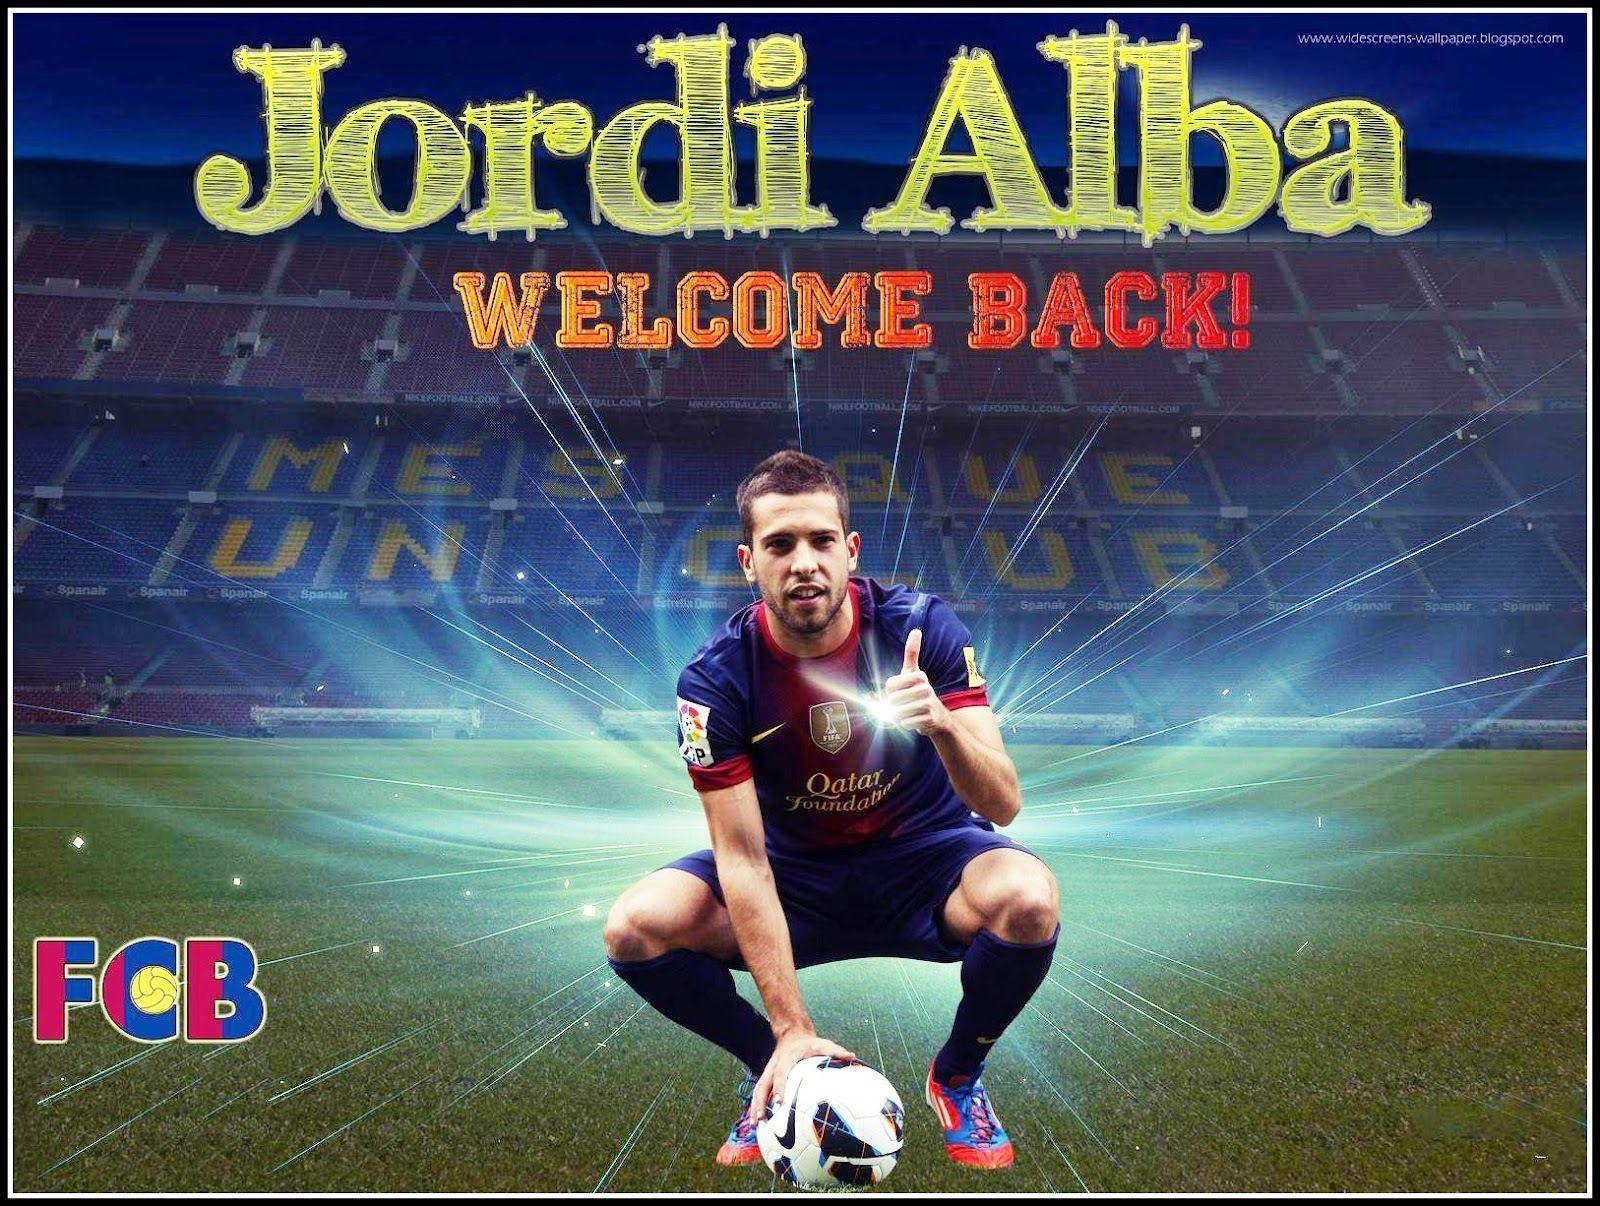 Barcelona Jordi Alba on the football field wallpaper and image